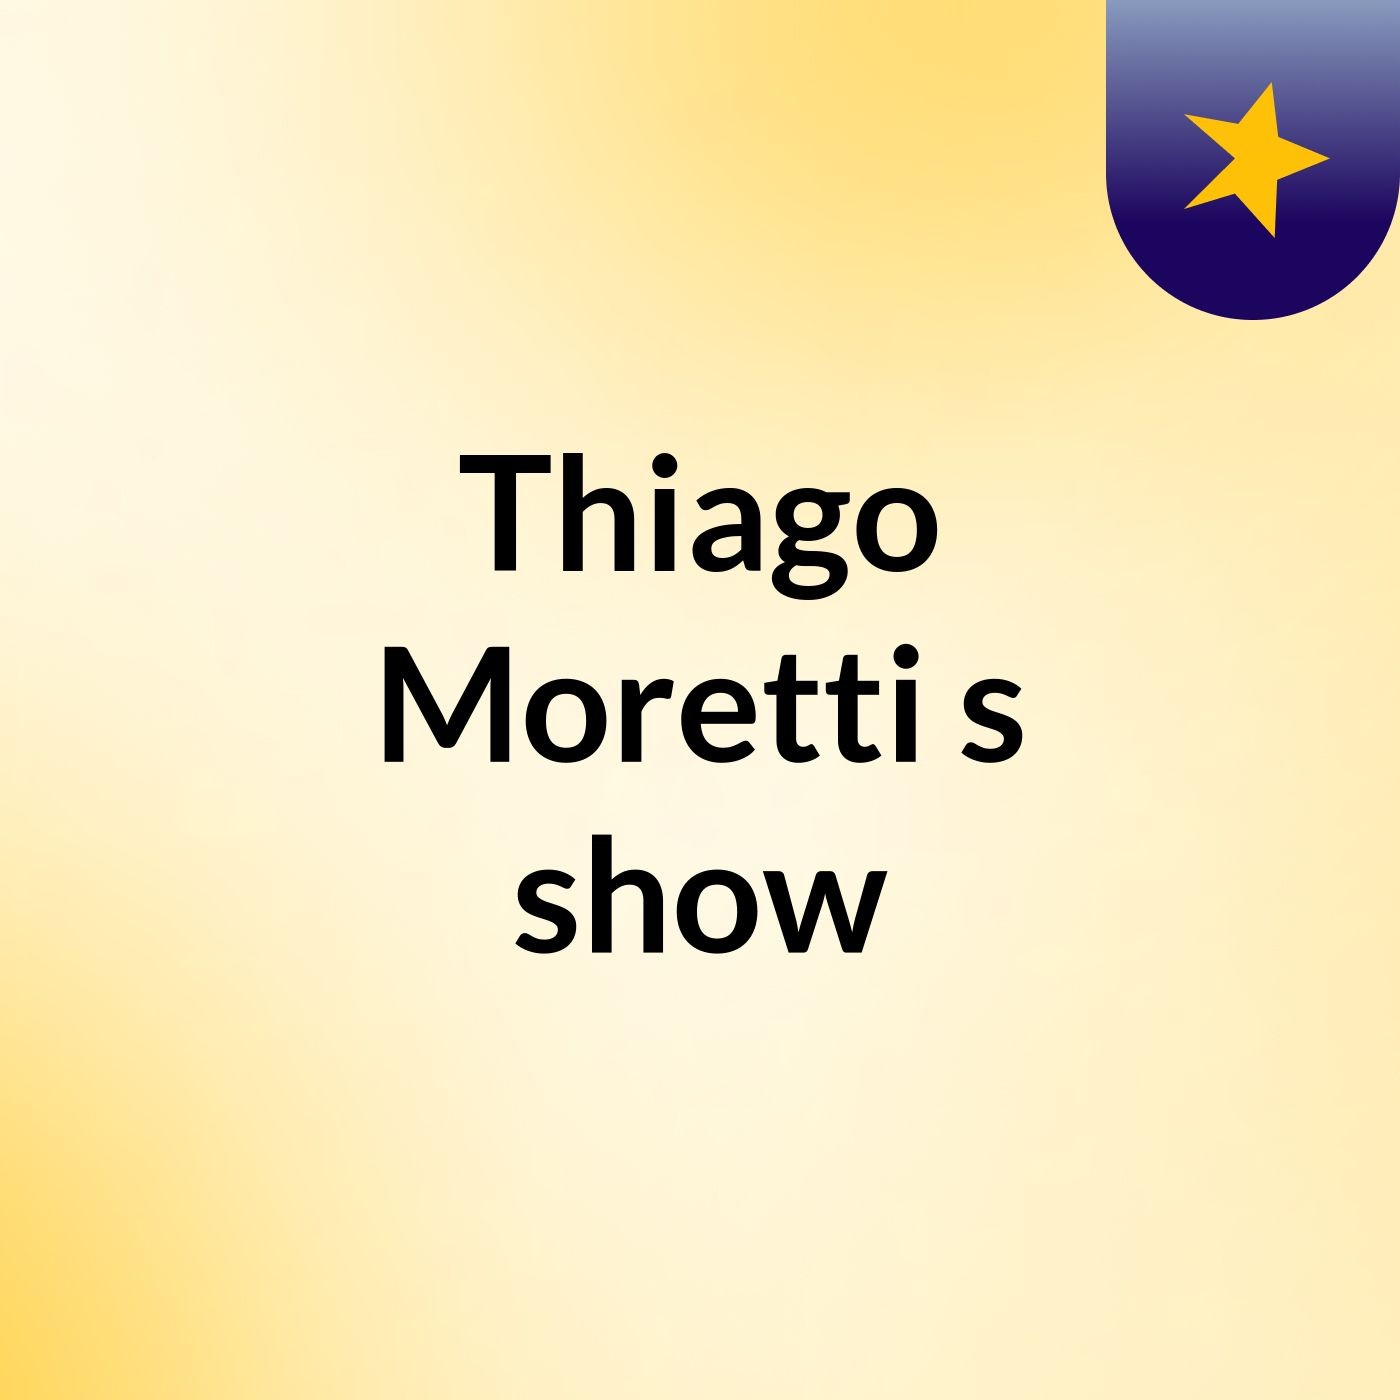 Thiago Moretti's show